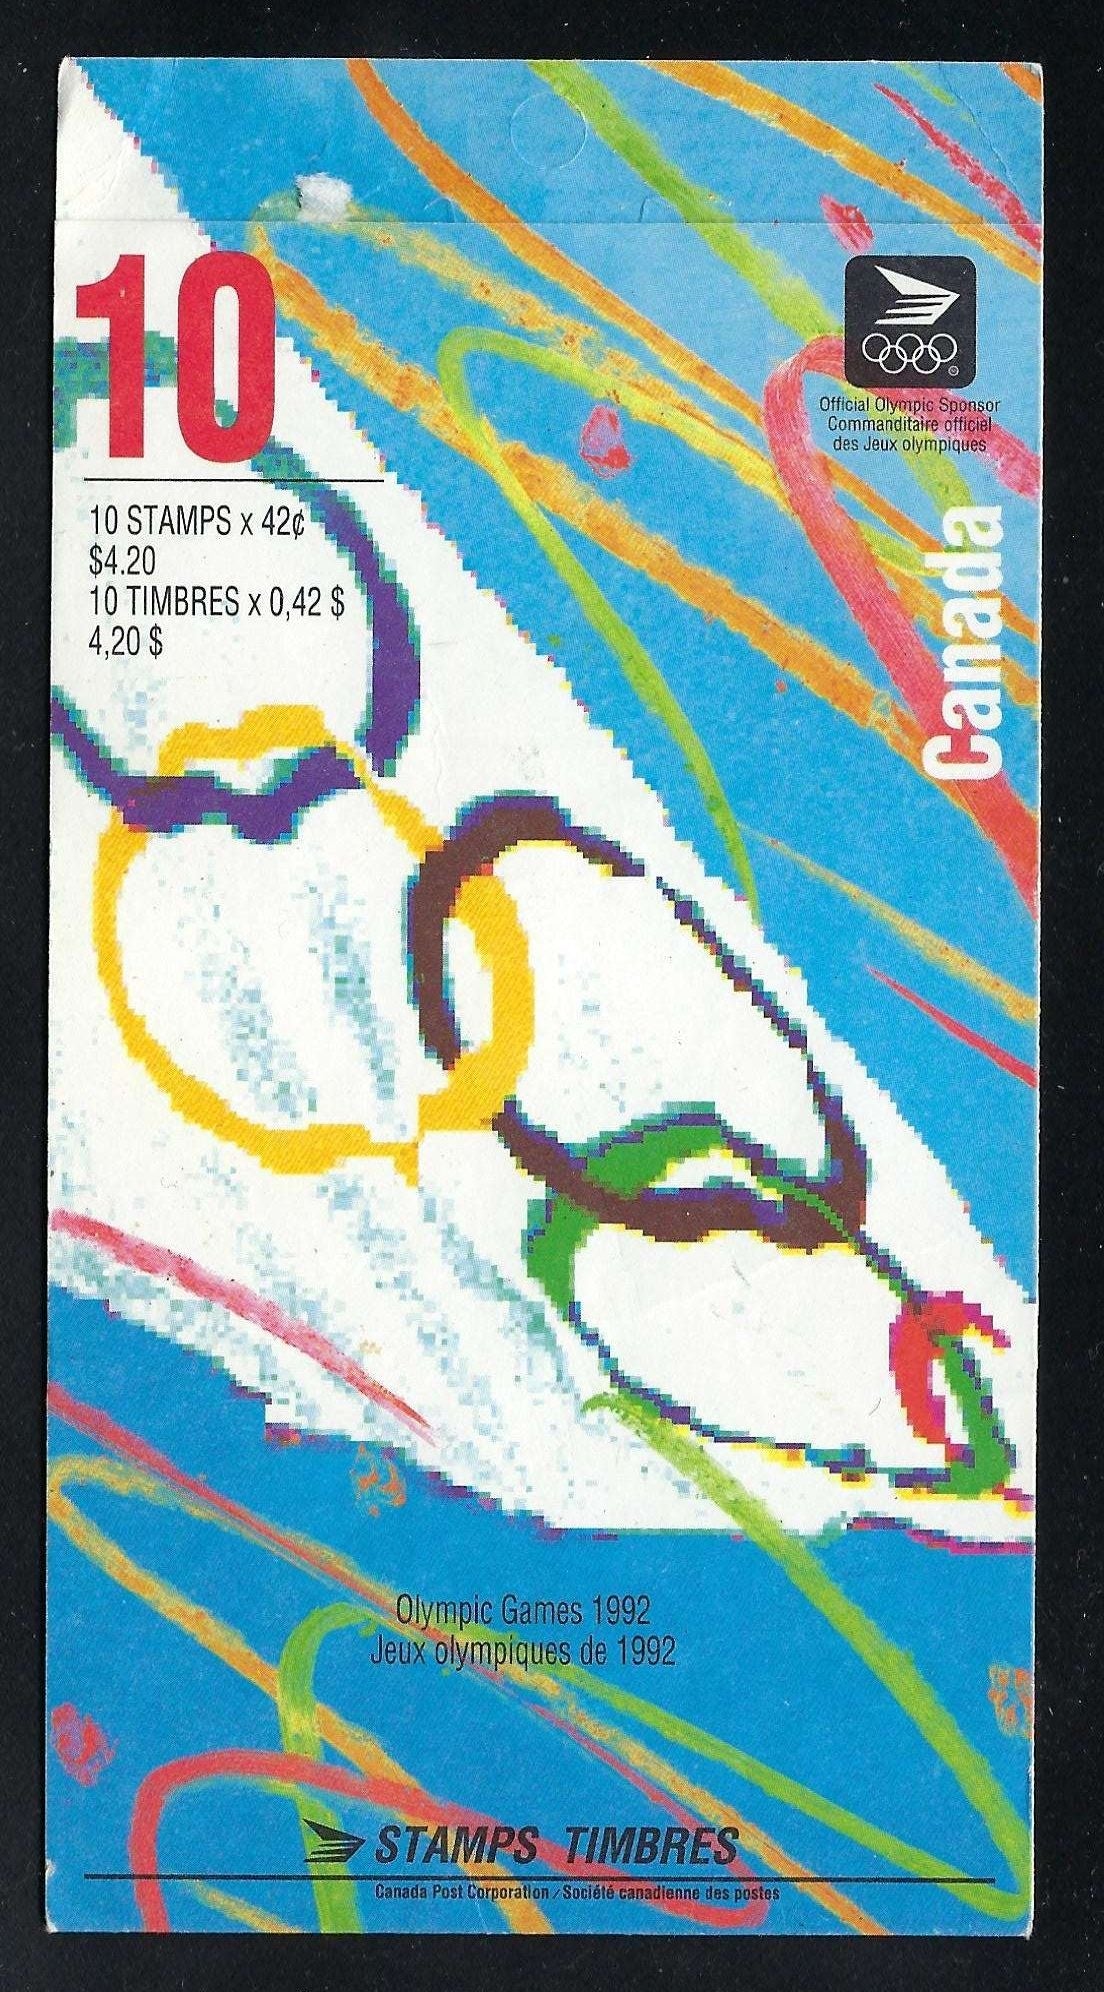 BK146c - 42¢ Olympic Summer Games